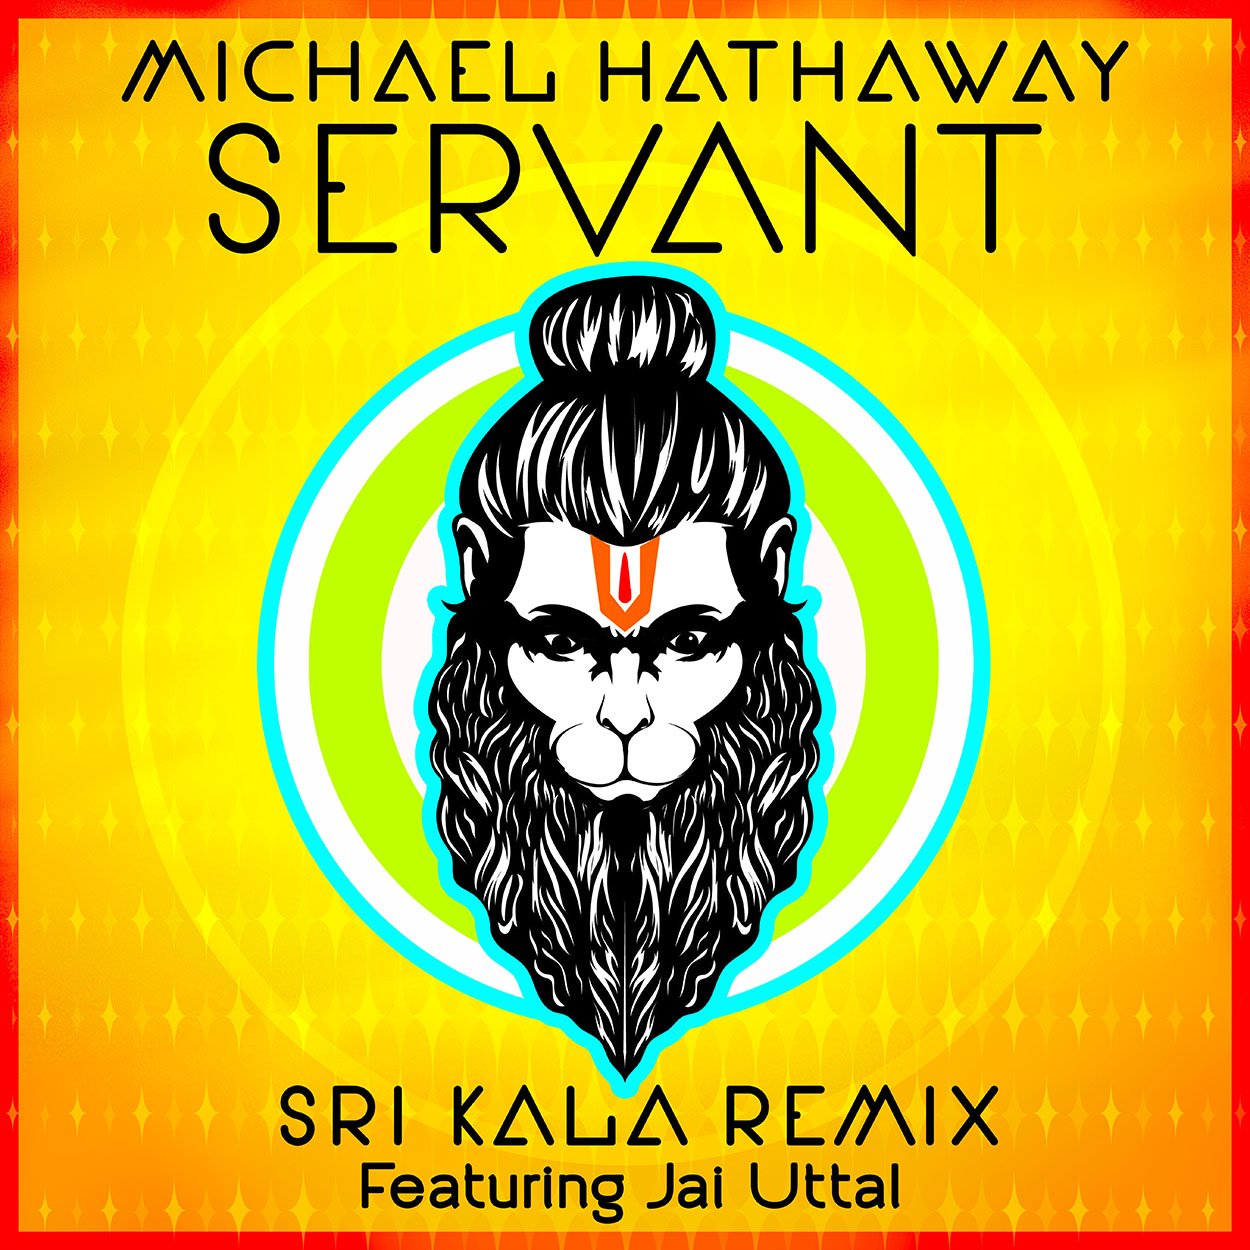 Servant Sri Kala Remix